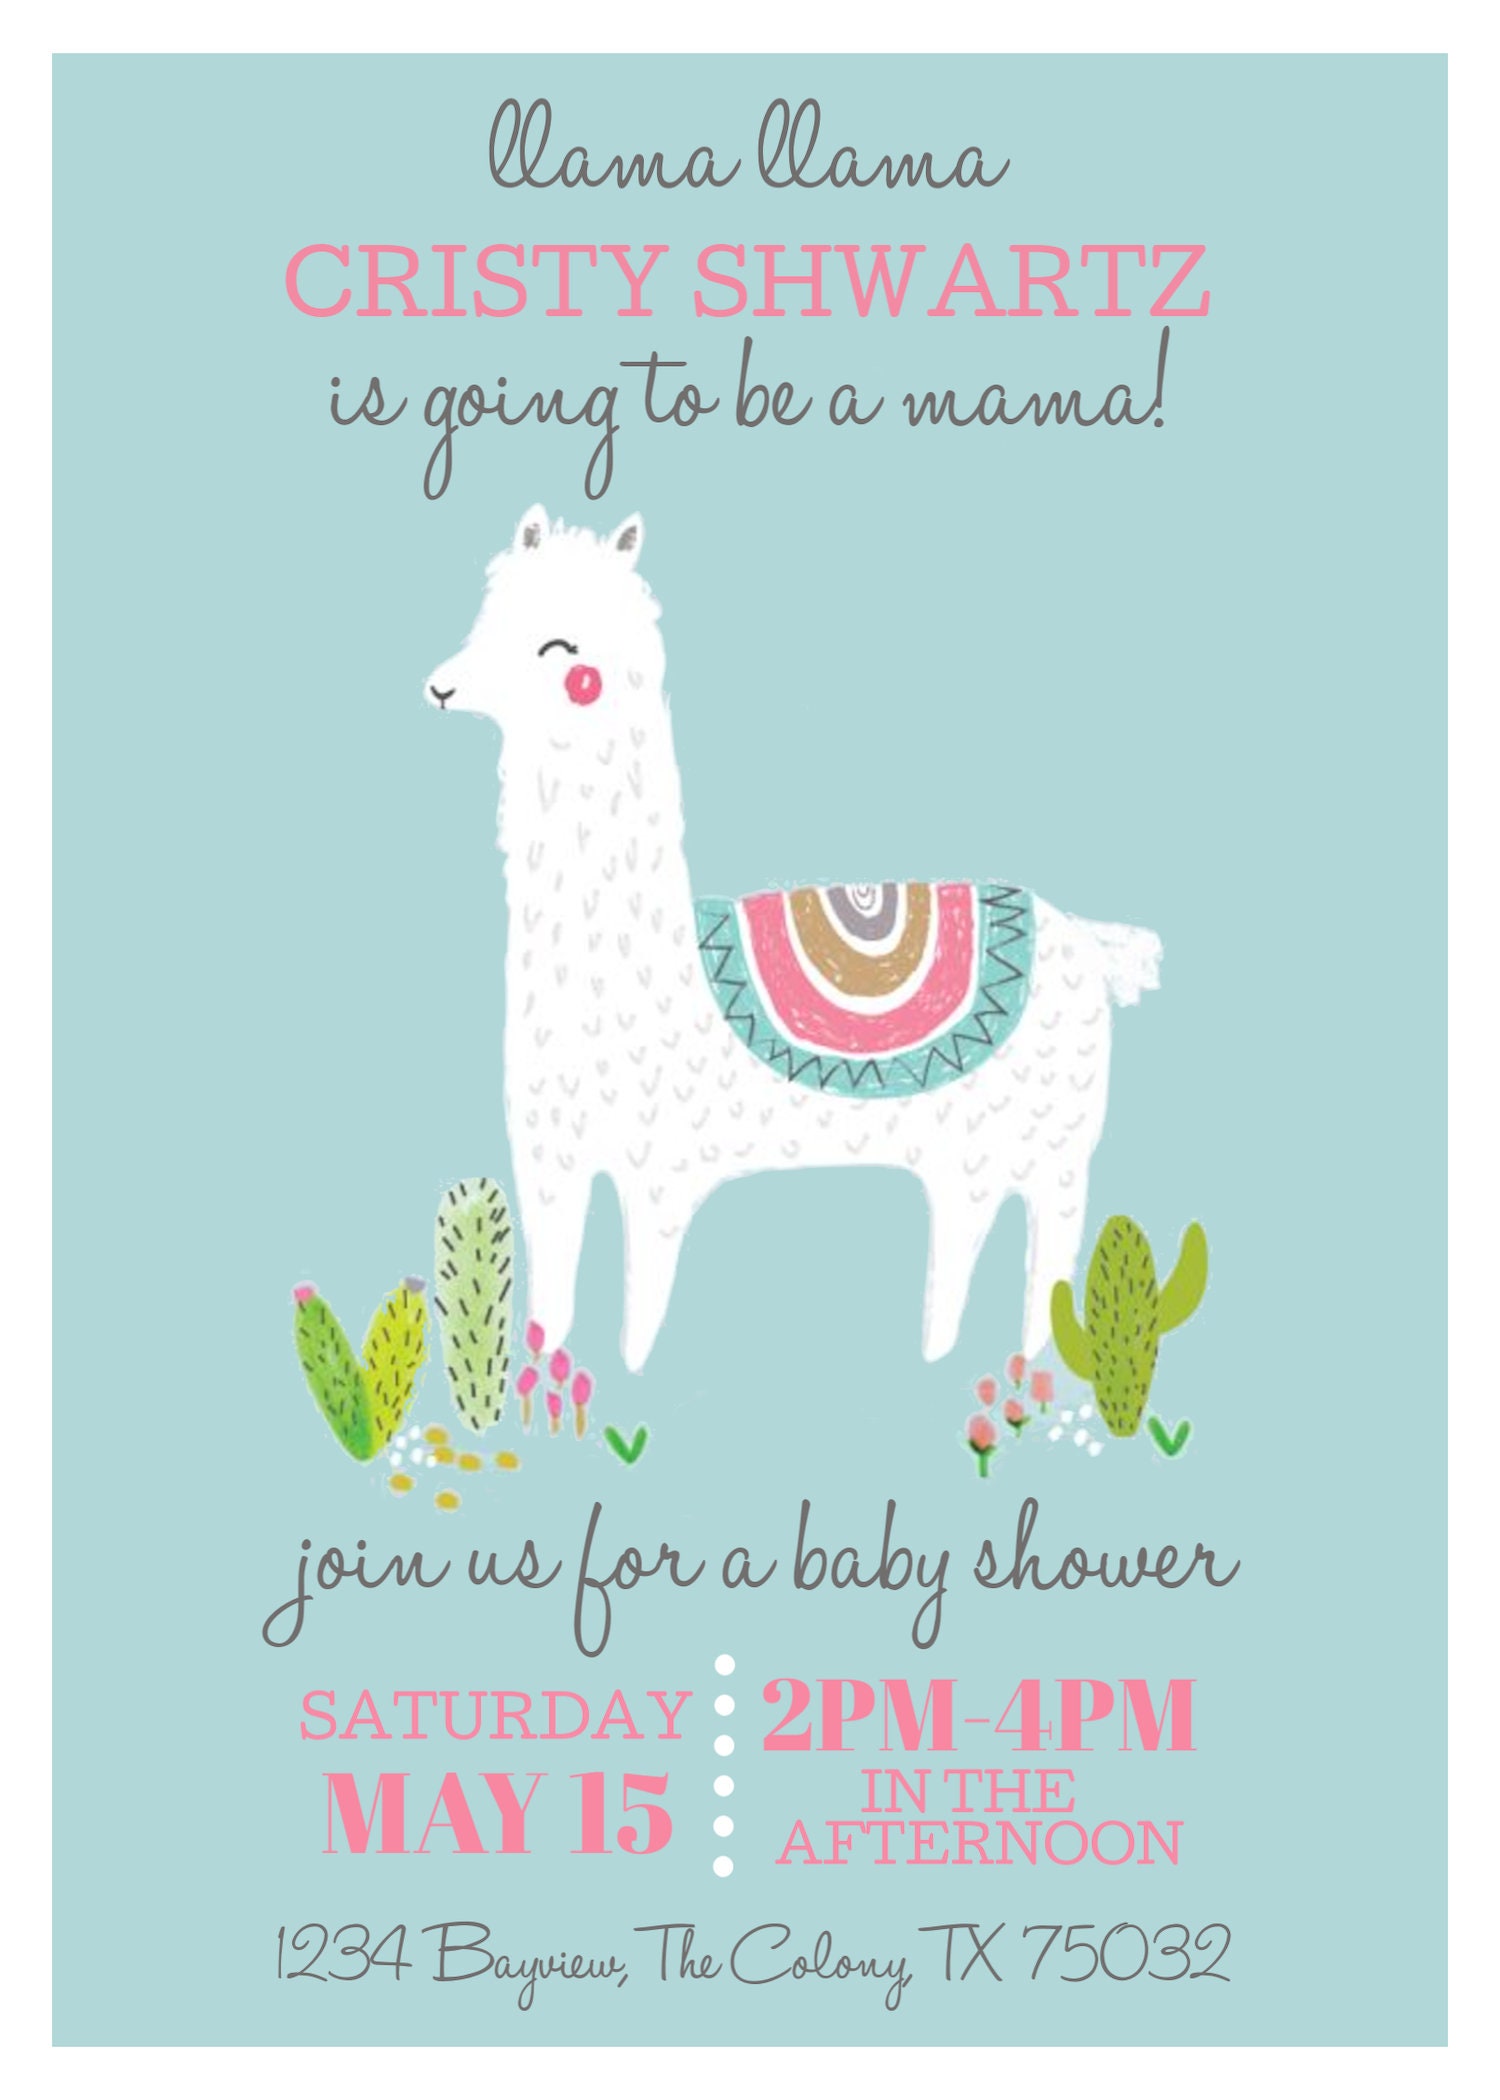 Llama Mama Baby Shower Invitation